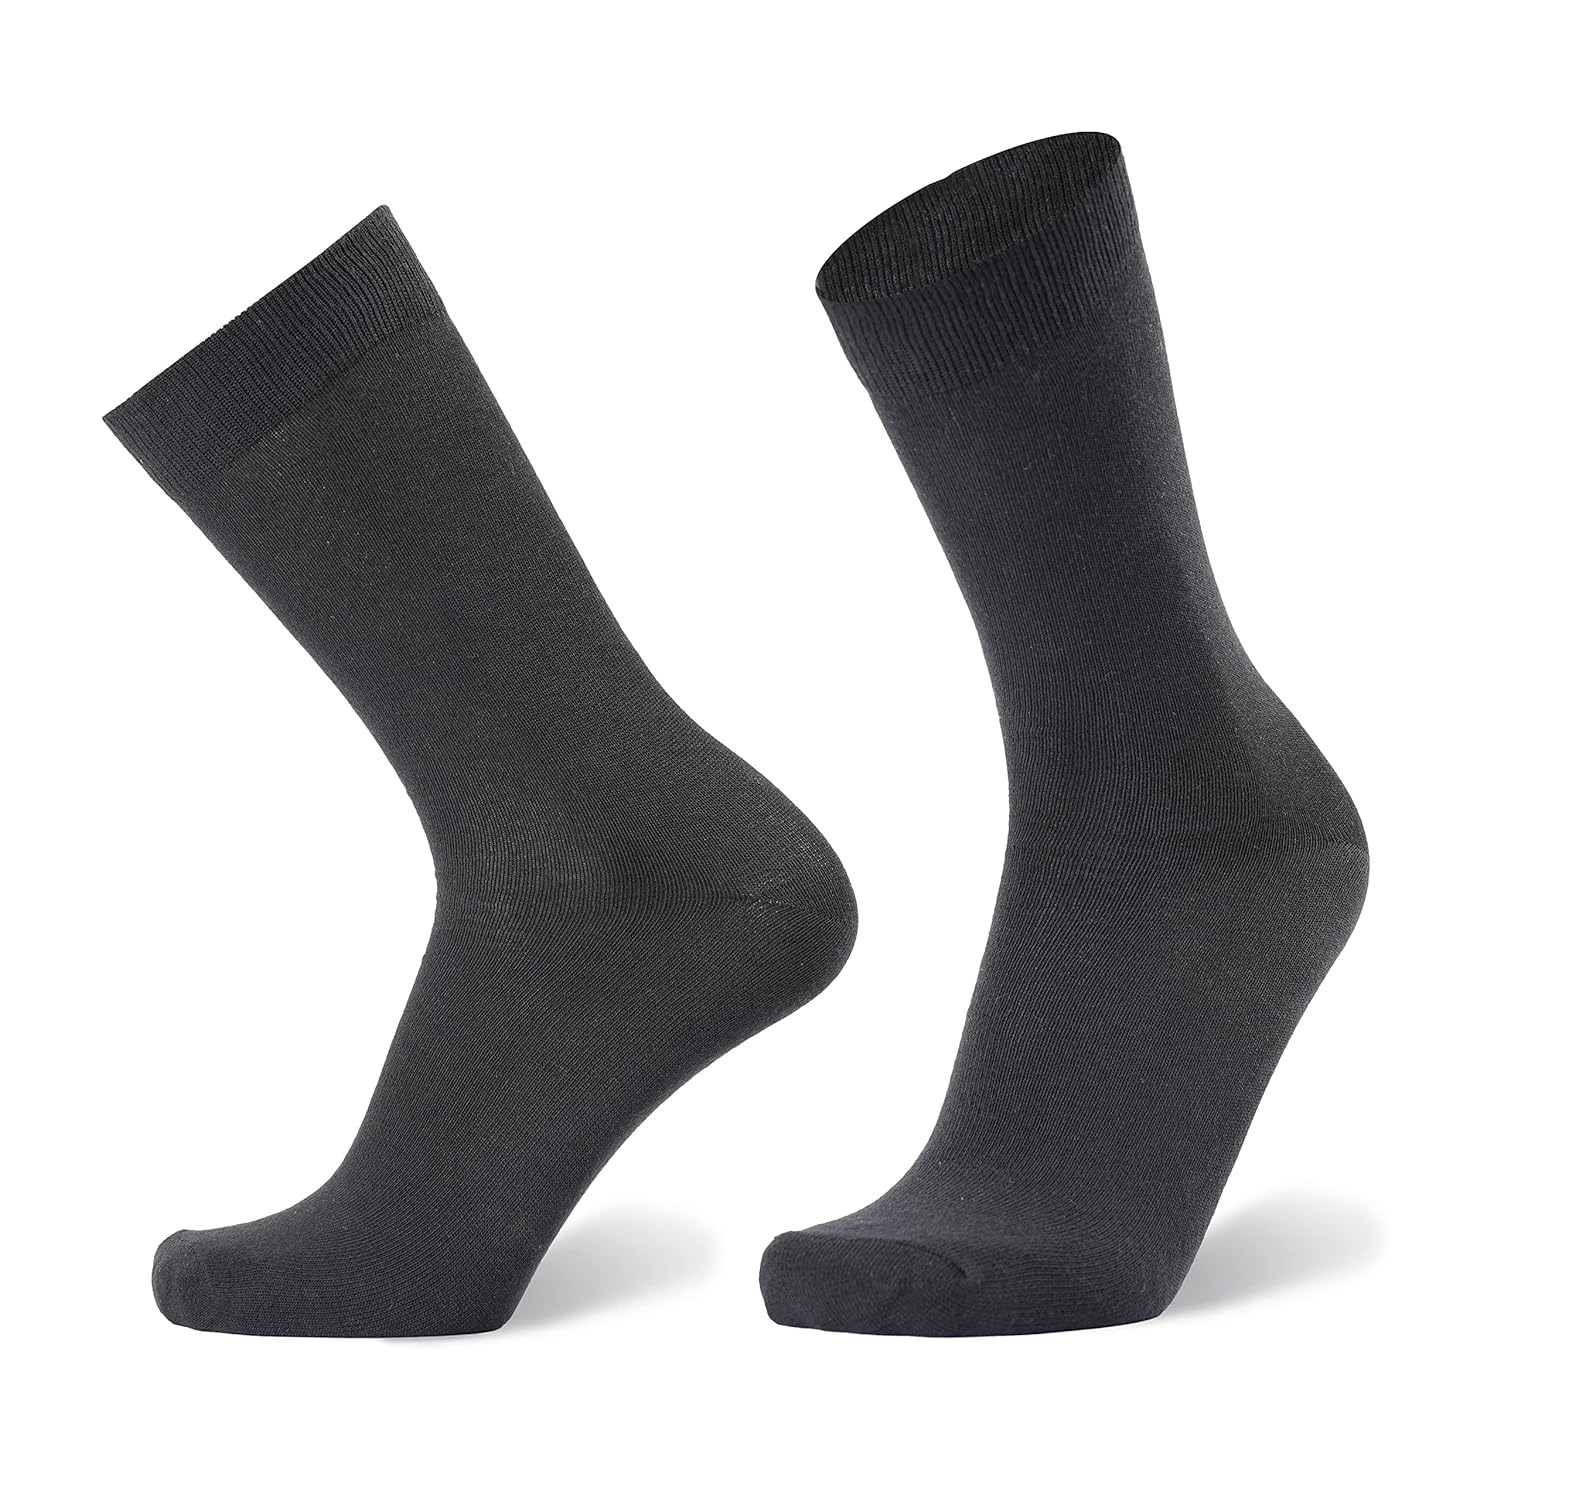 Absorbent socks